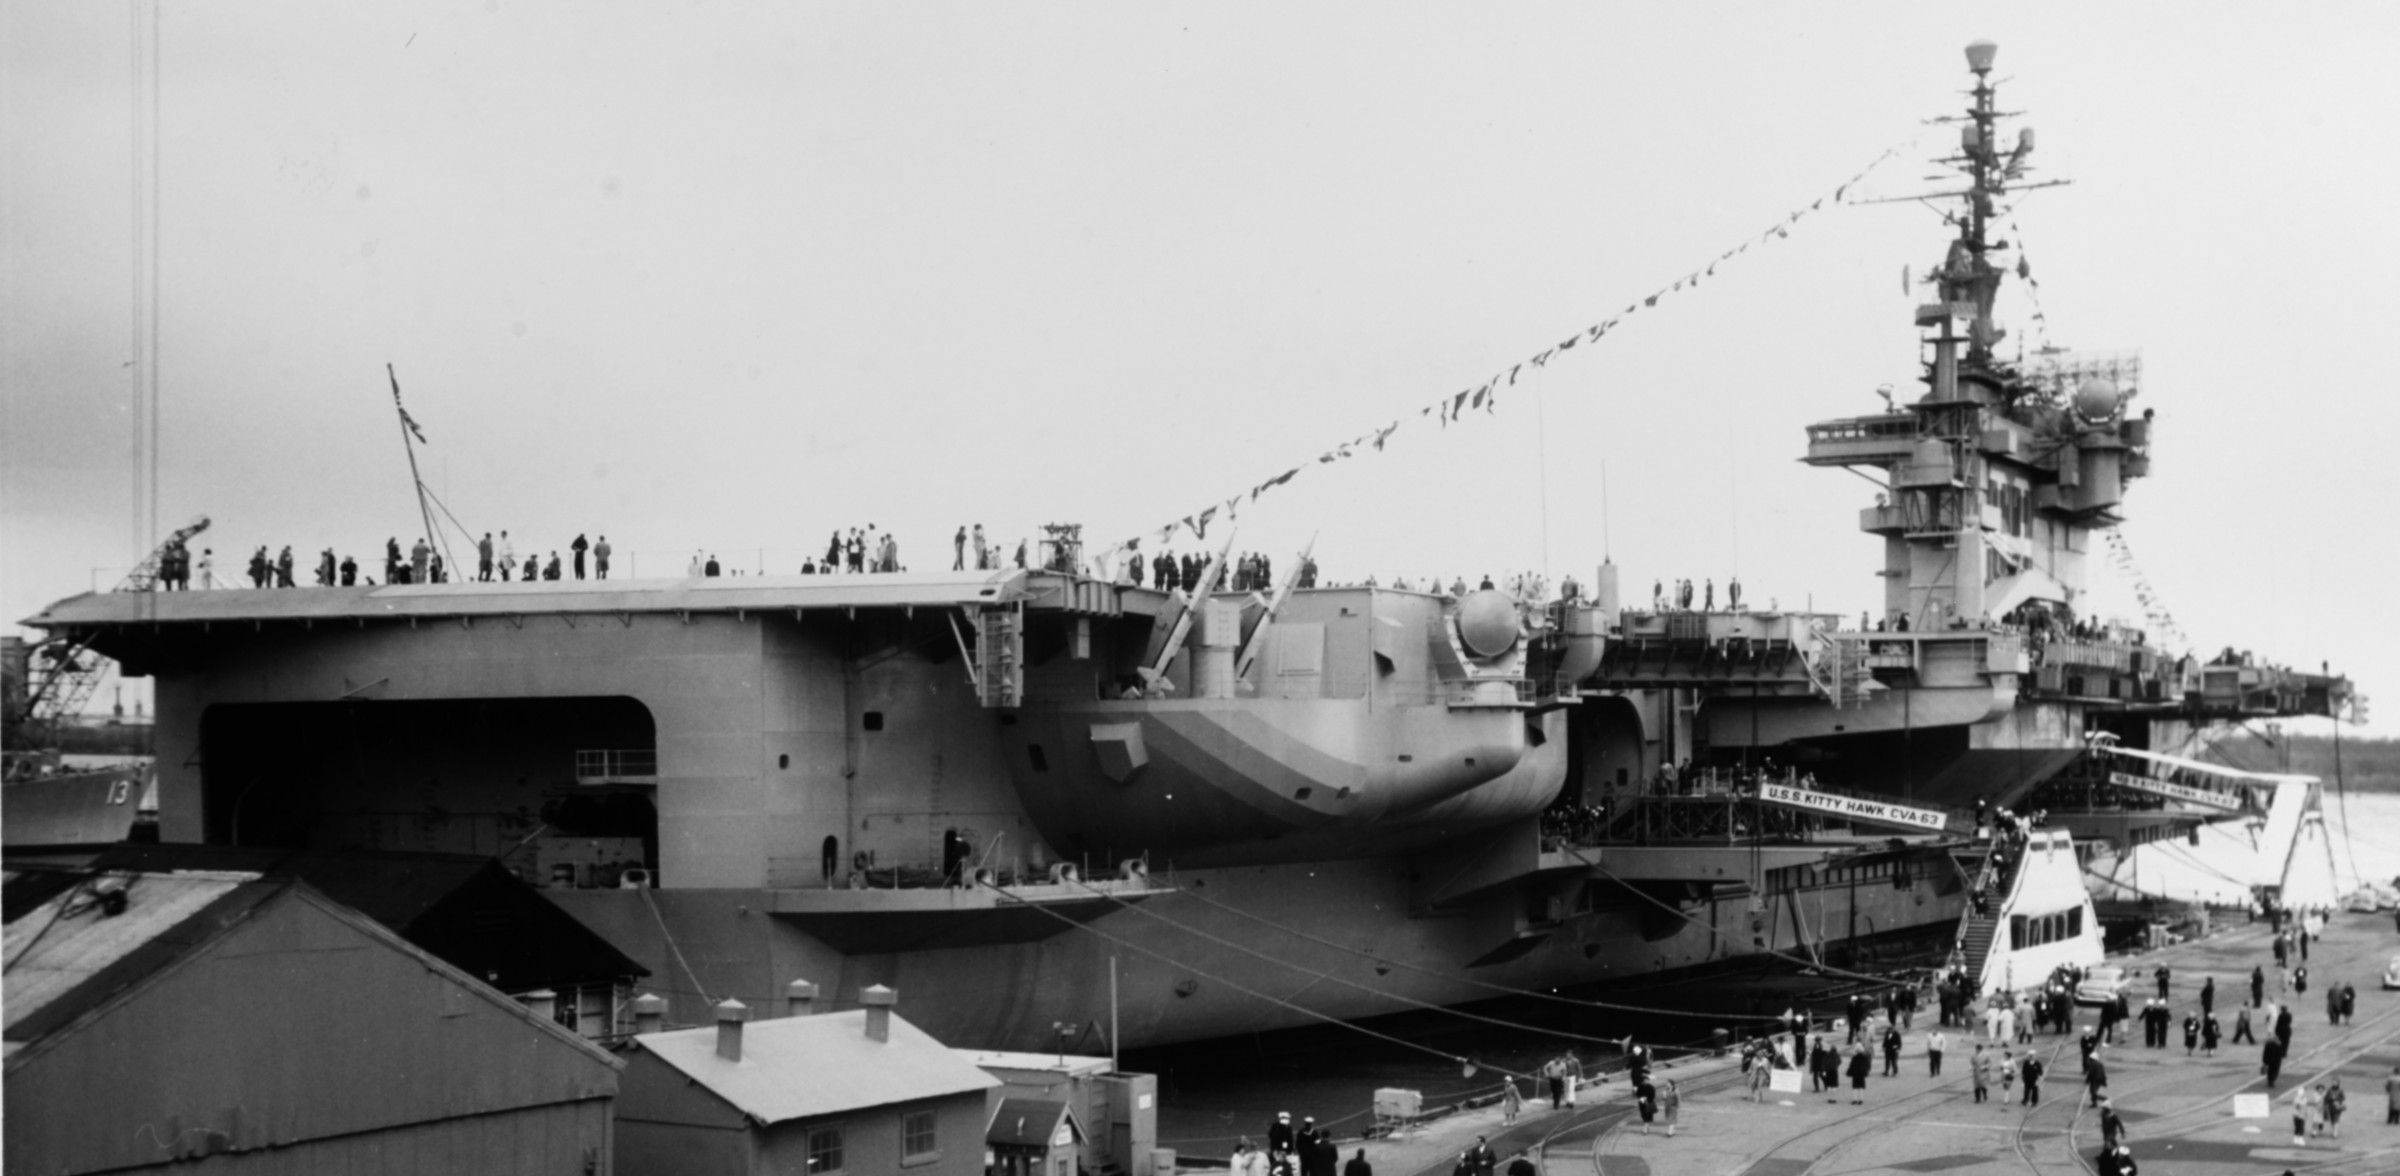 cva-63 uss kitty hawk aircraft carrier commissioning ceremony philadelphia naval shipyard pennsylvania 1961